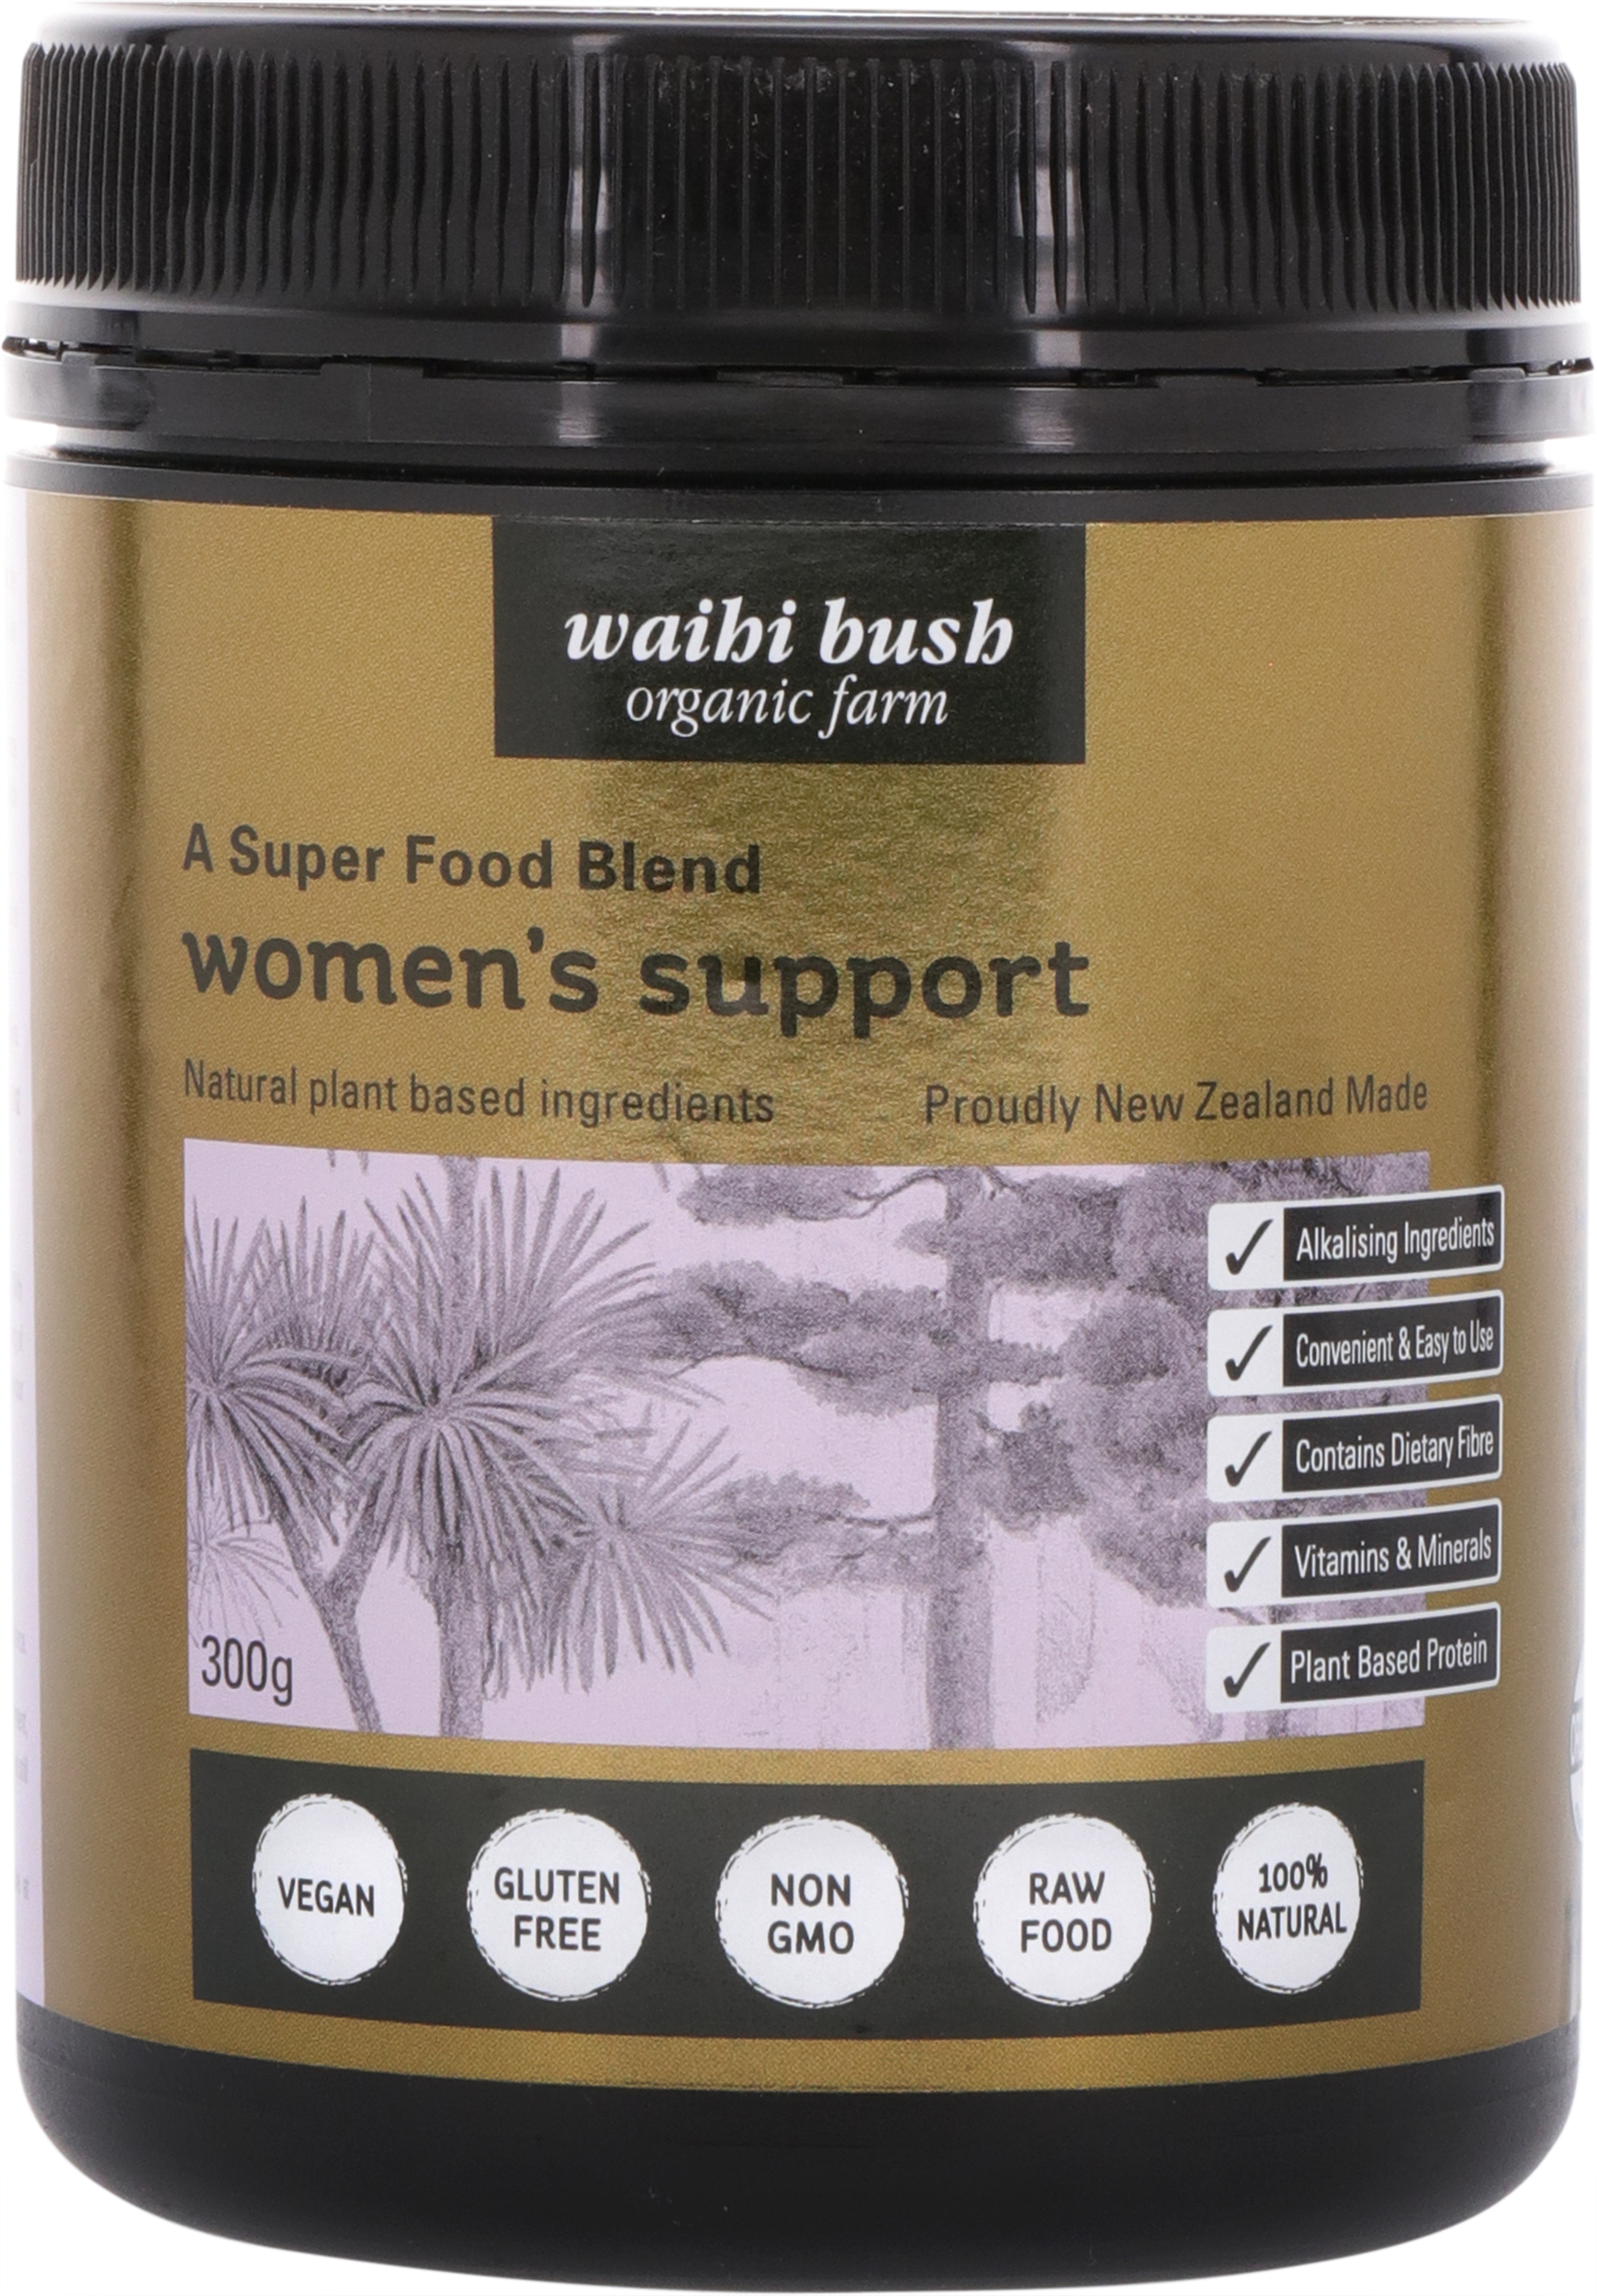 Waihi Bush Organic Farm brand A Super Food Blend Women’s Support (300g)